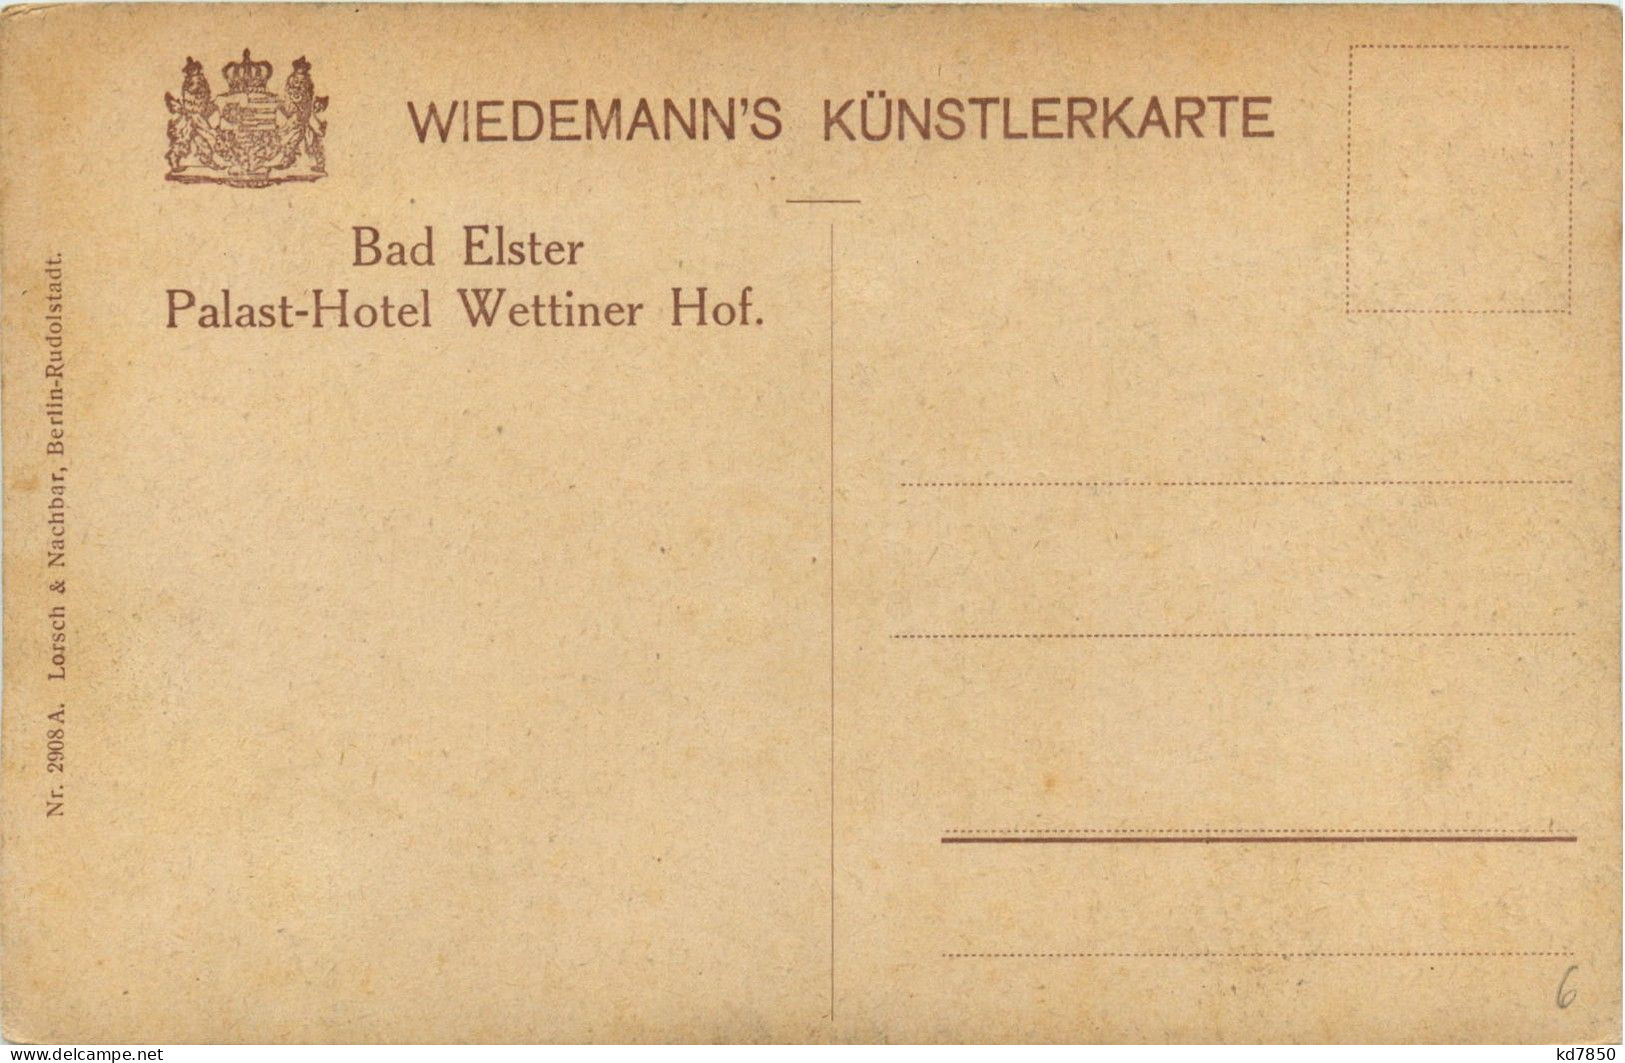 Bad Elster - Palast-Hotel Wttiner Hof - Bad Elster